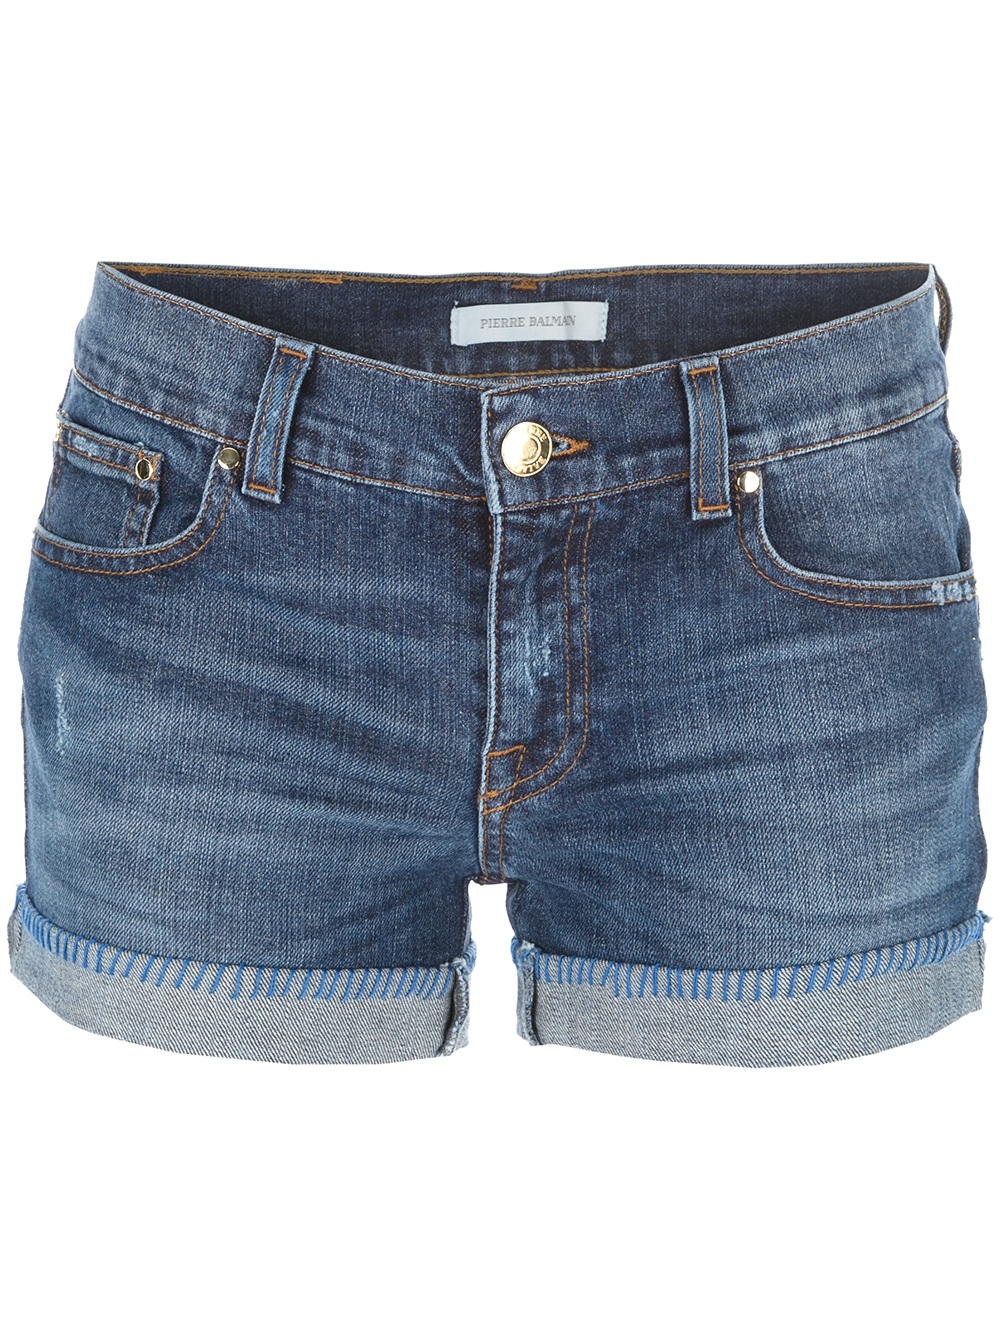 Balmain Denim Shorts in Blue (denim) | Lyst